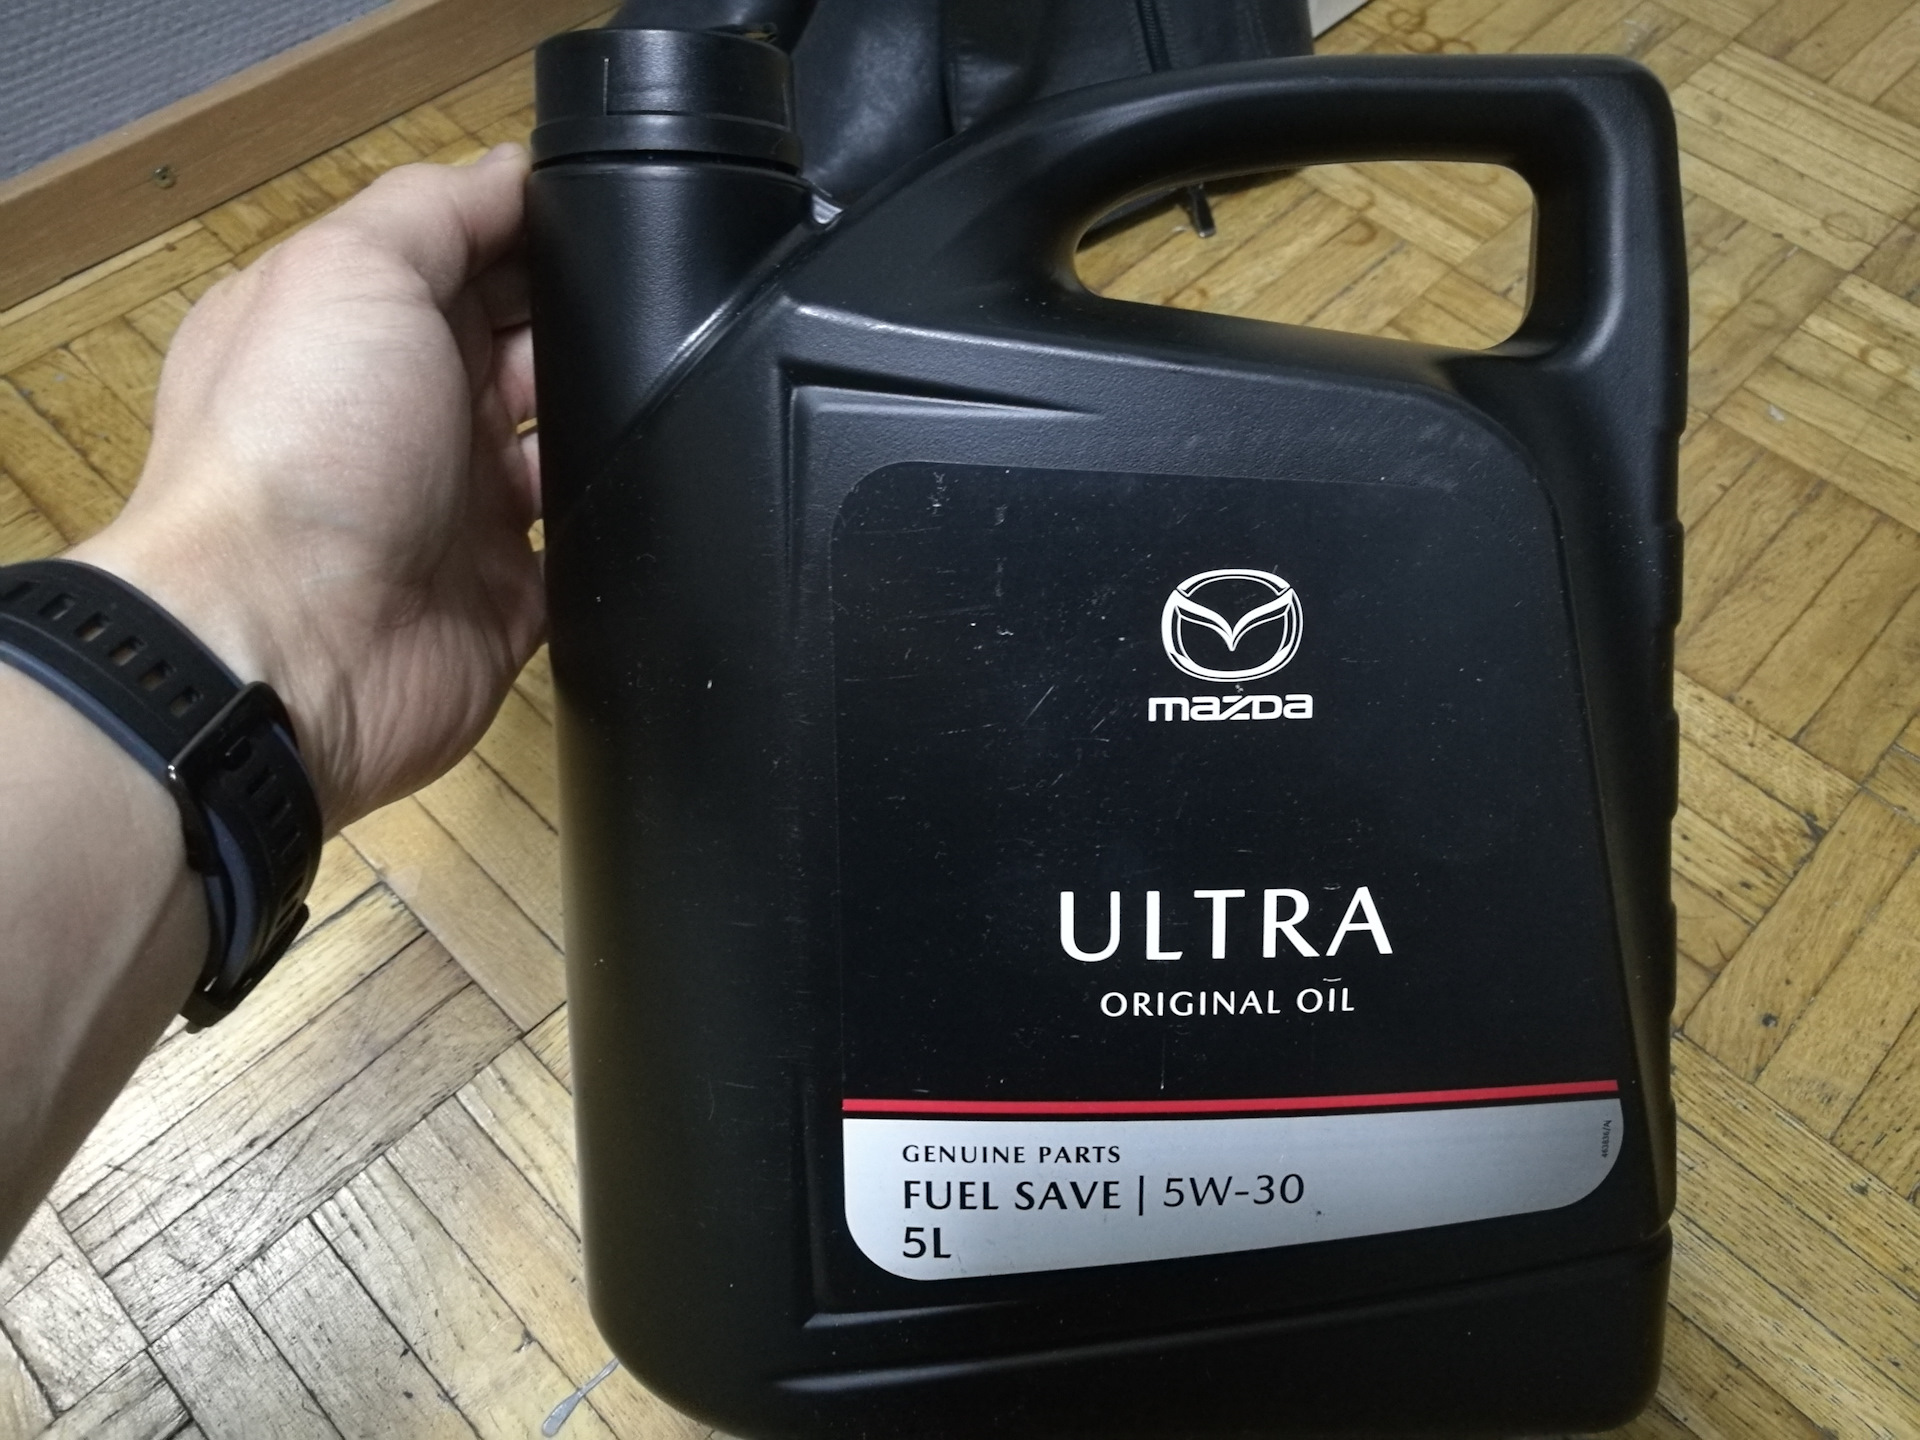 Масло ультра оригинал. Mazda Ultra 5w-30 5л. Mazda Original Oil Ultra 5w-30. Mazda 830077992 масло моторное. Оригинальное масло Mazda 5w30.